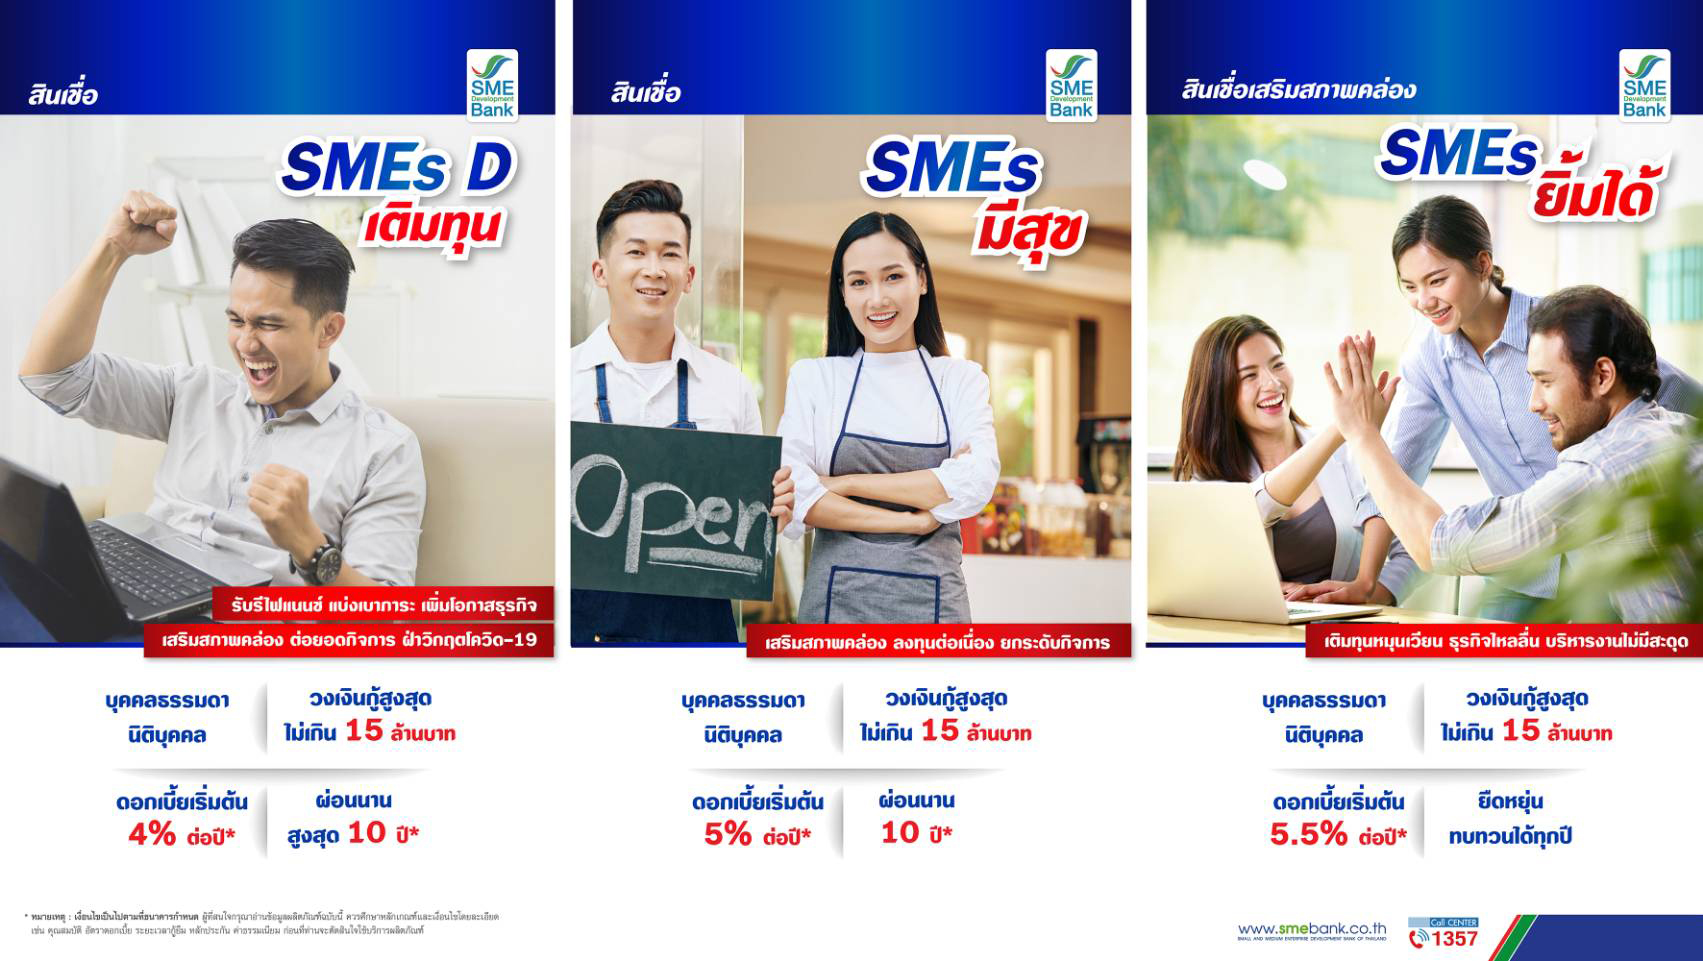 SME D Bank จัด 15,000 ลบ. คลอดแพคเกจสินเชื่อ ‘เติมทุน SMEs มีสุข ยิ้มได้’ กู้ได้สูงถึง 15 ลบ. ช่วยเอสเอ็มอีทุกธุรกิจ เสริมสภาพคล่อง ลดต้นทุนการเงิน